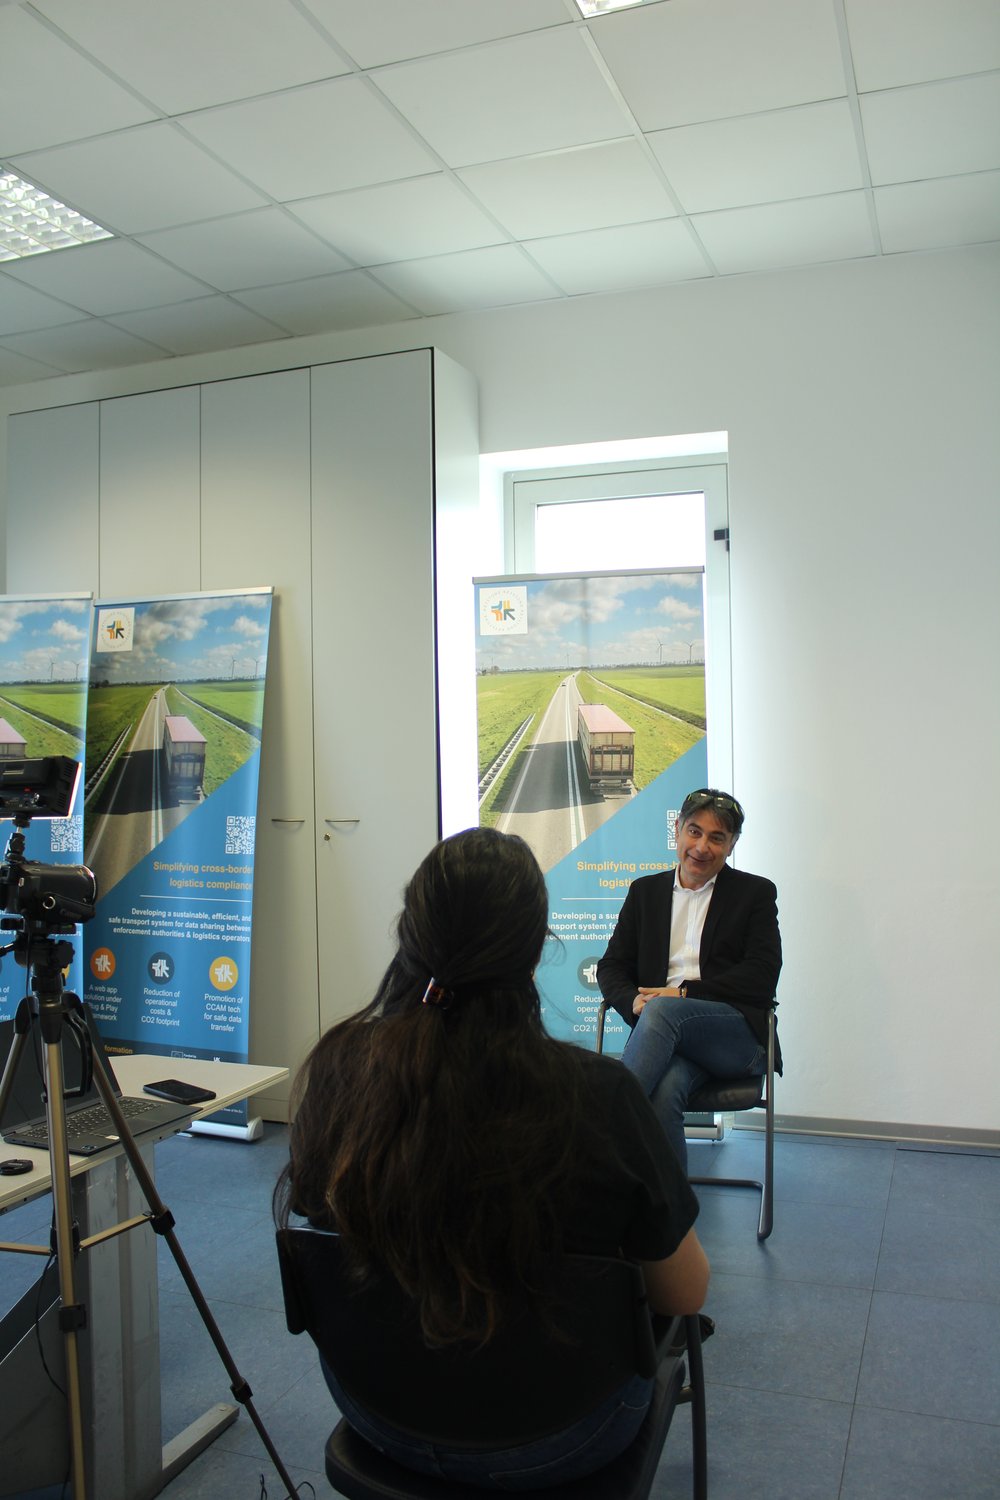 Interviews of KEYSTONE consortium partners